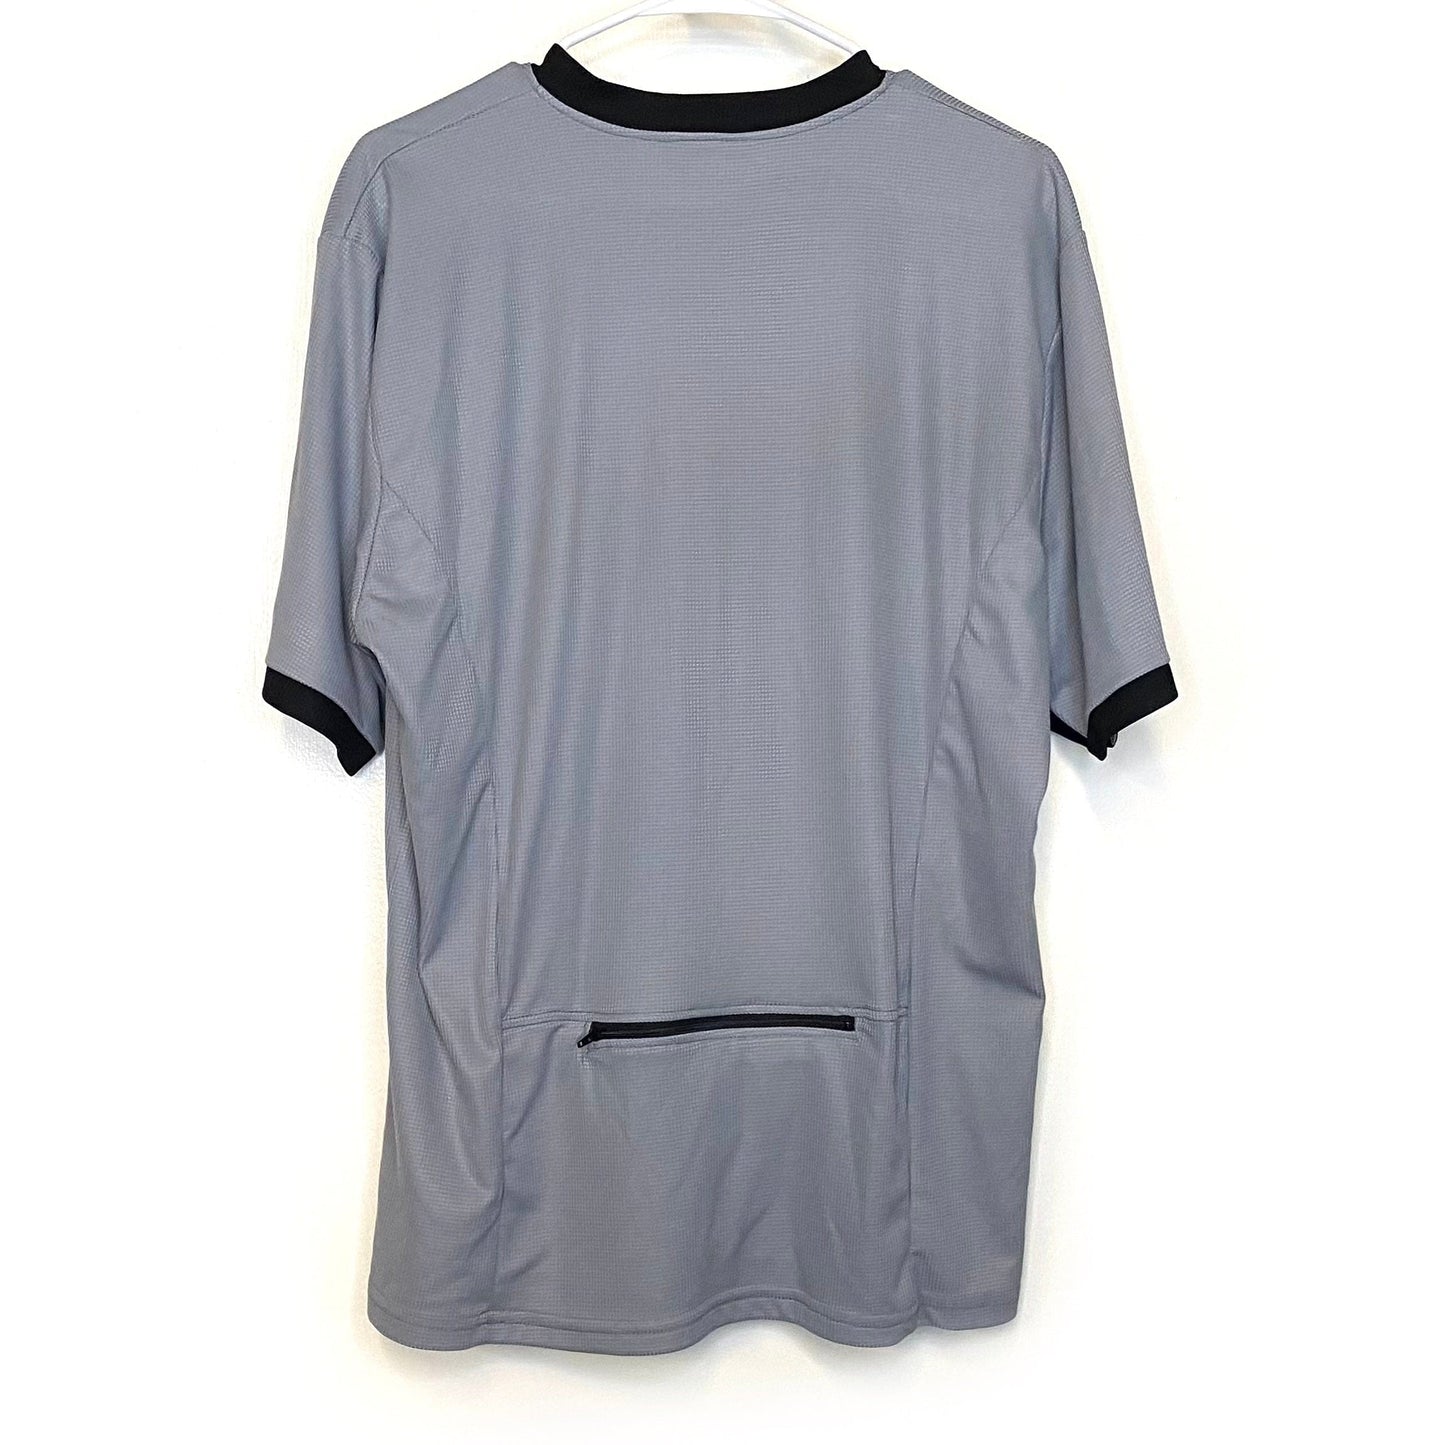 Canari Mens Size XL Gray ¼ Zip Cycling Jersey Shirt Lightweight Back Pocket Pre-Owned